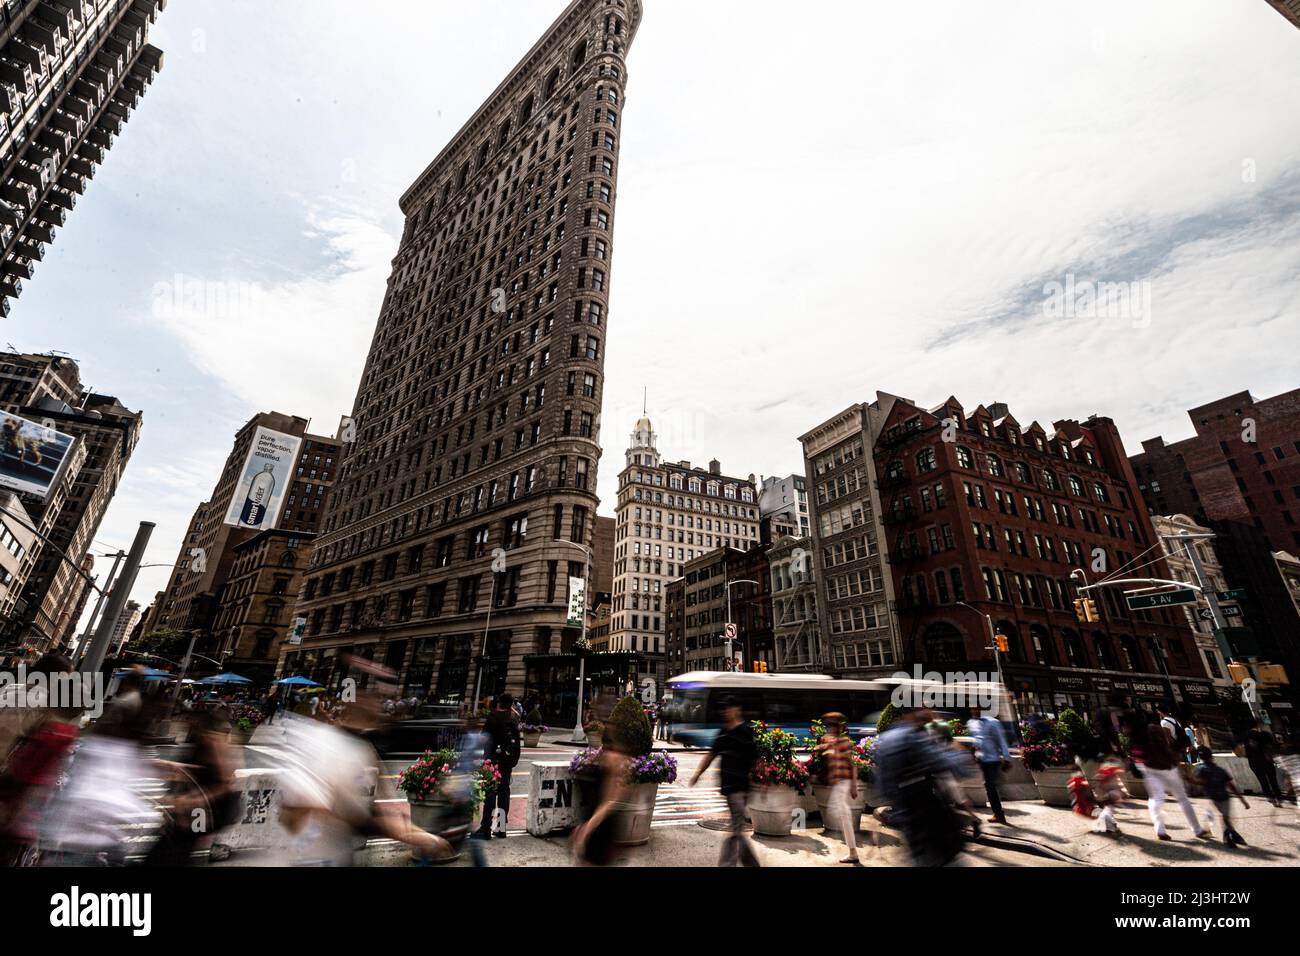 Flatiron Public Plaza, Nueva York, NY, EE.UU., Disparador lento del histórico Flatiron o Fuller Building. Este emblemático edificio triangular situado en la Quinta Avenida de Manhattan se completó en 1902. Foto de stock